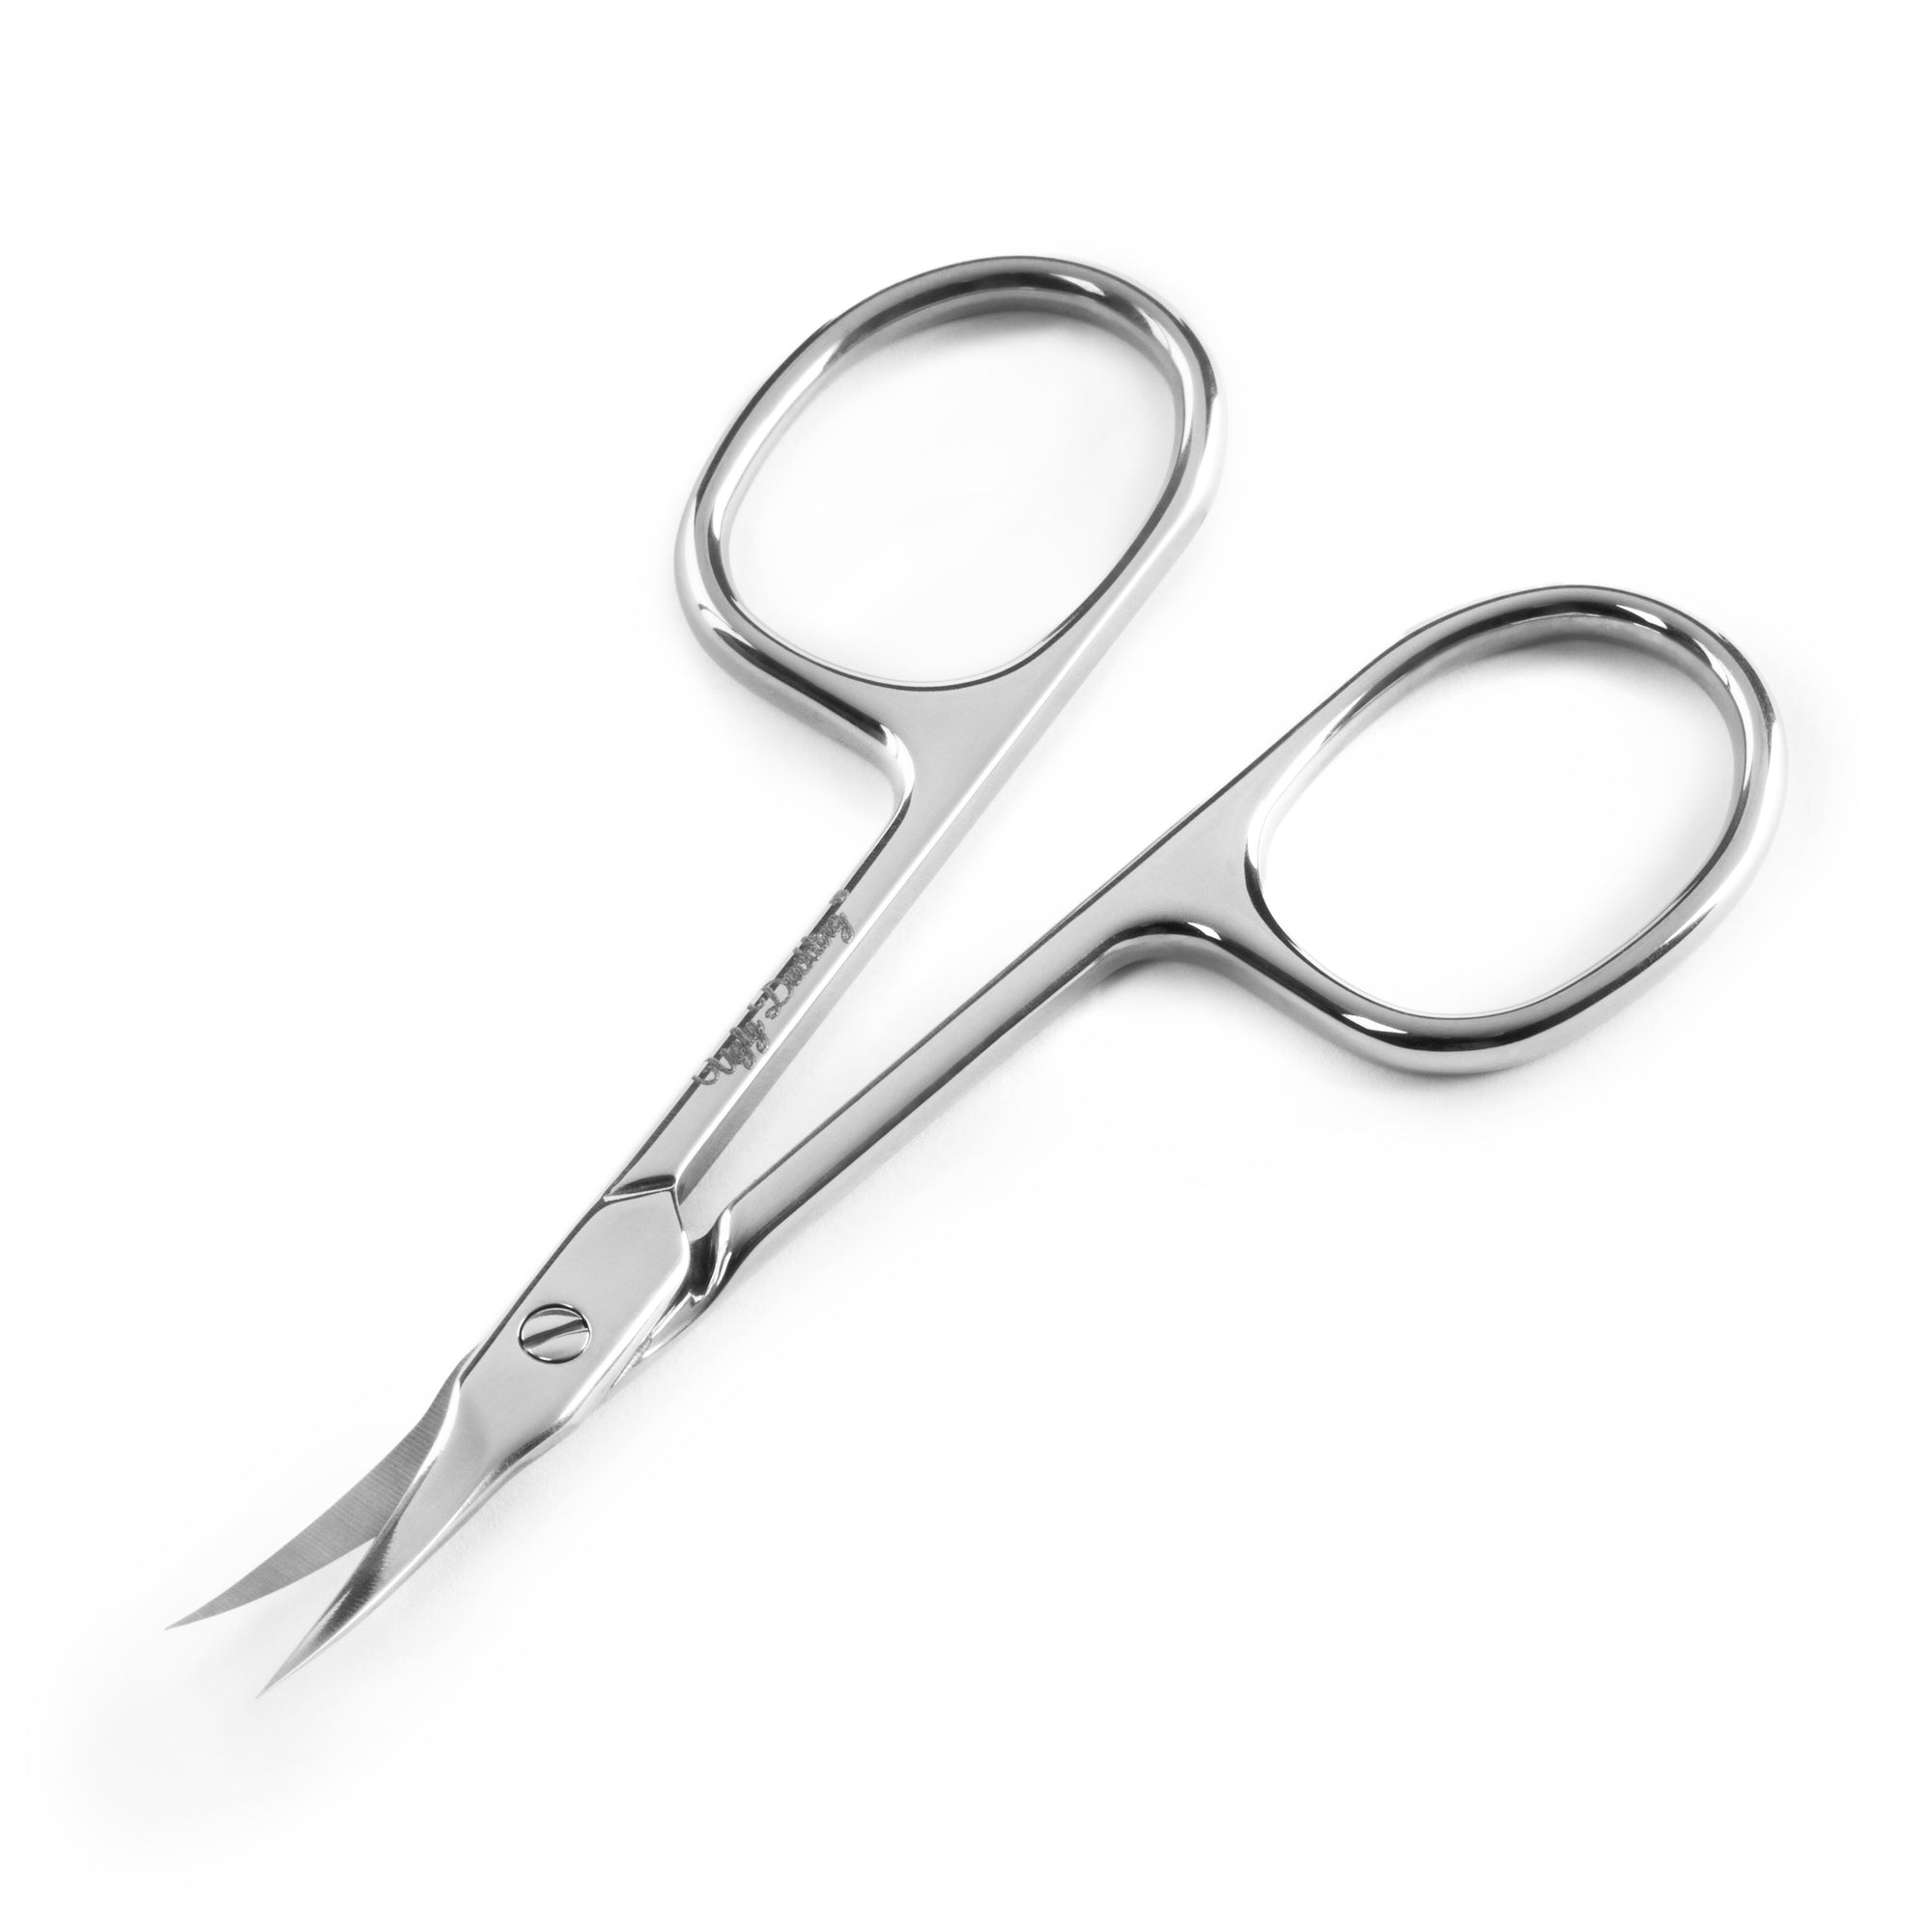 Sizzez - Cuticle Scissors